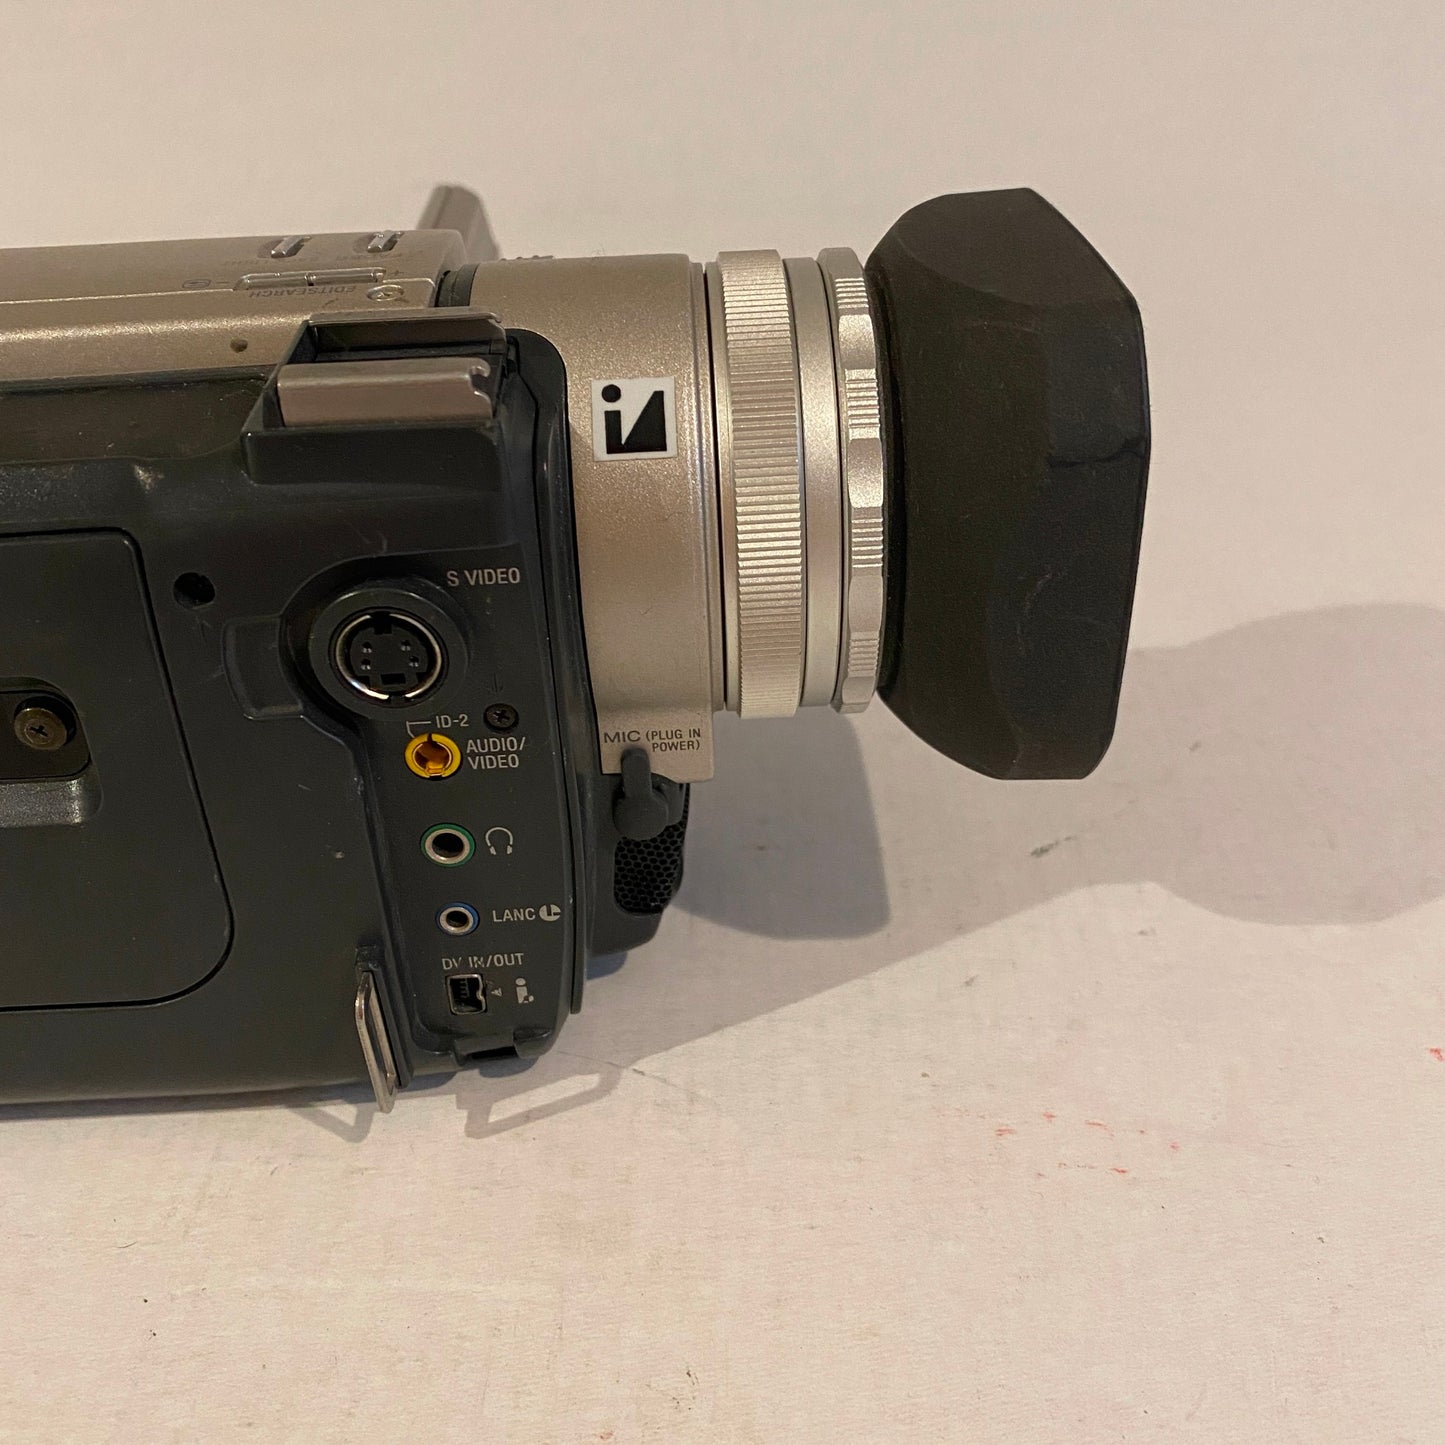 Sony Handycam Mini DV Digital Video Camera - DCR-TRV900